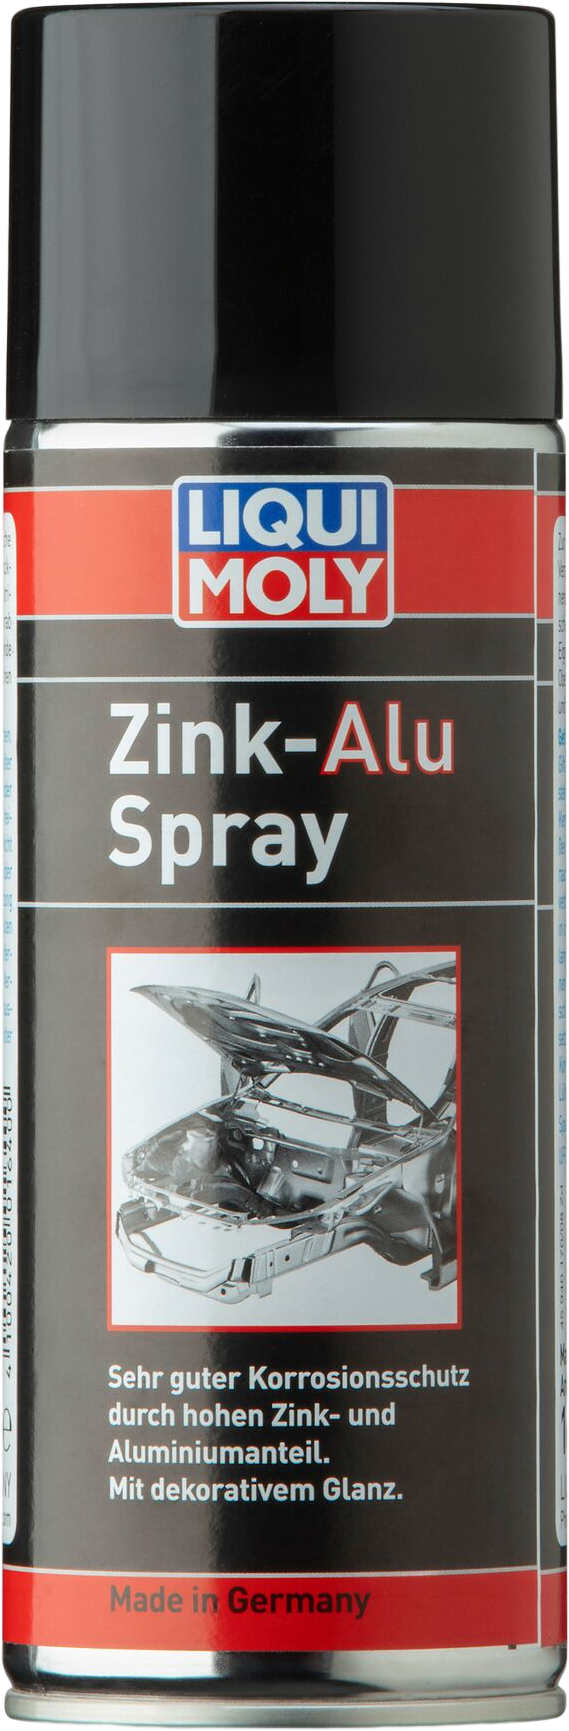 Liqui Moly Zink-aluminiumspray, 6 x 400 ml detail 2